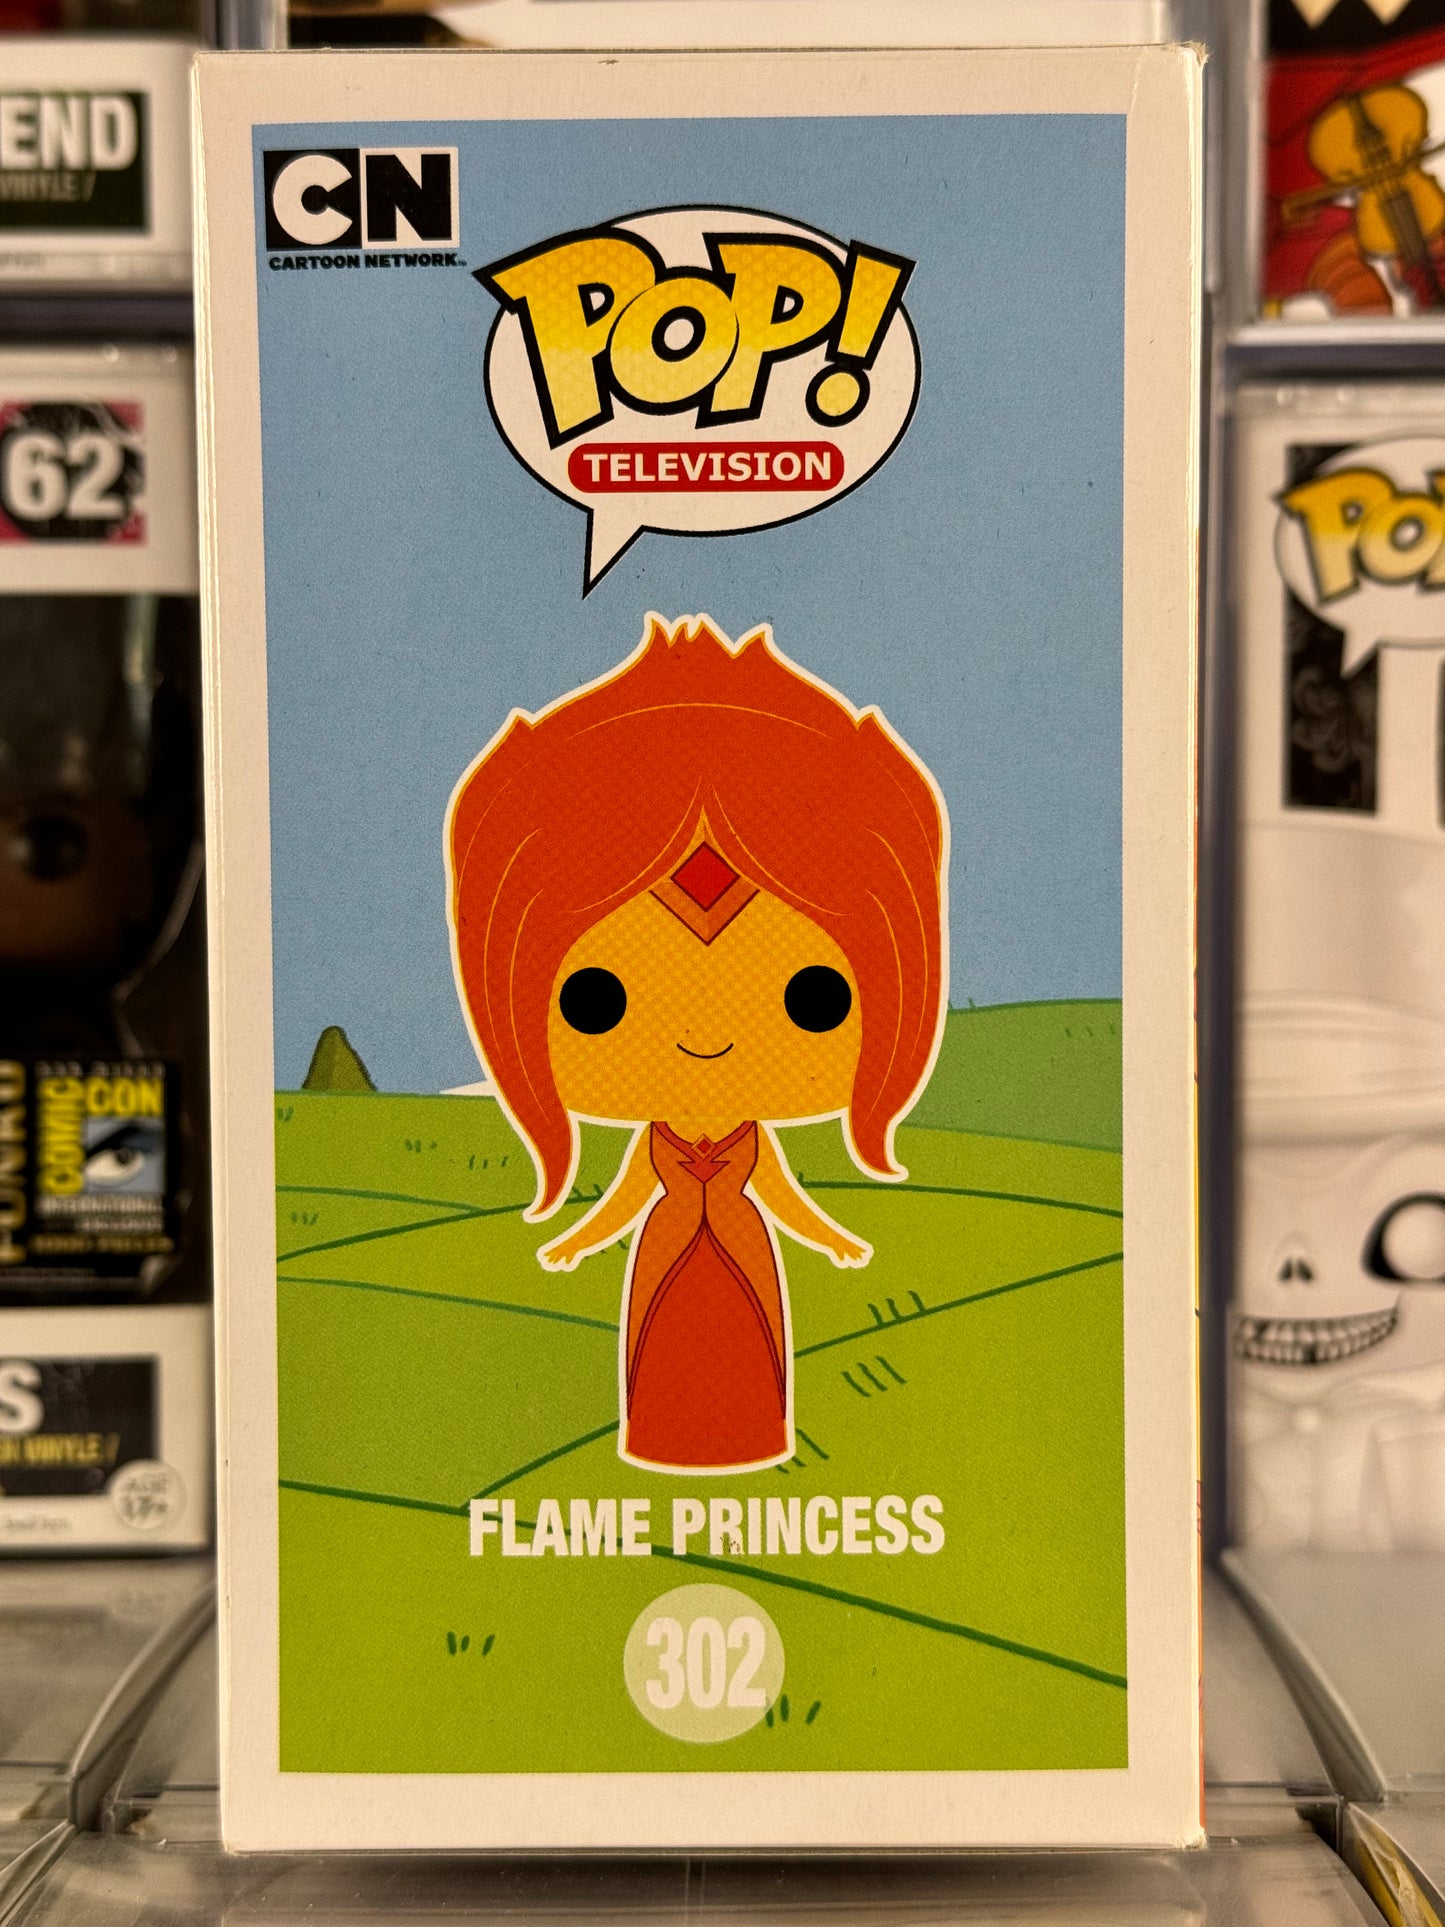 Adventure Time - Flame Princess (302) Vaulted